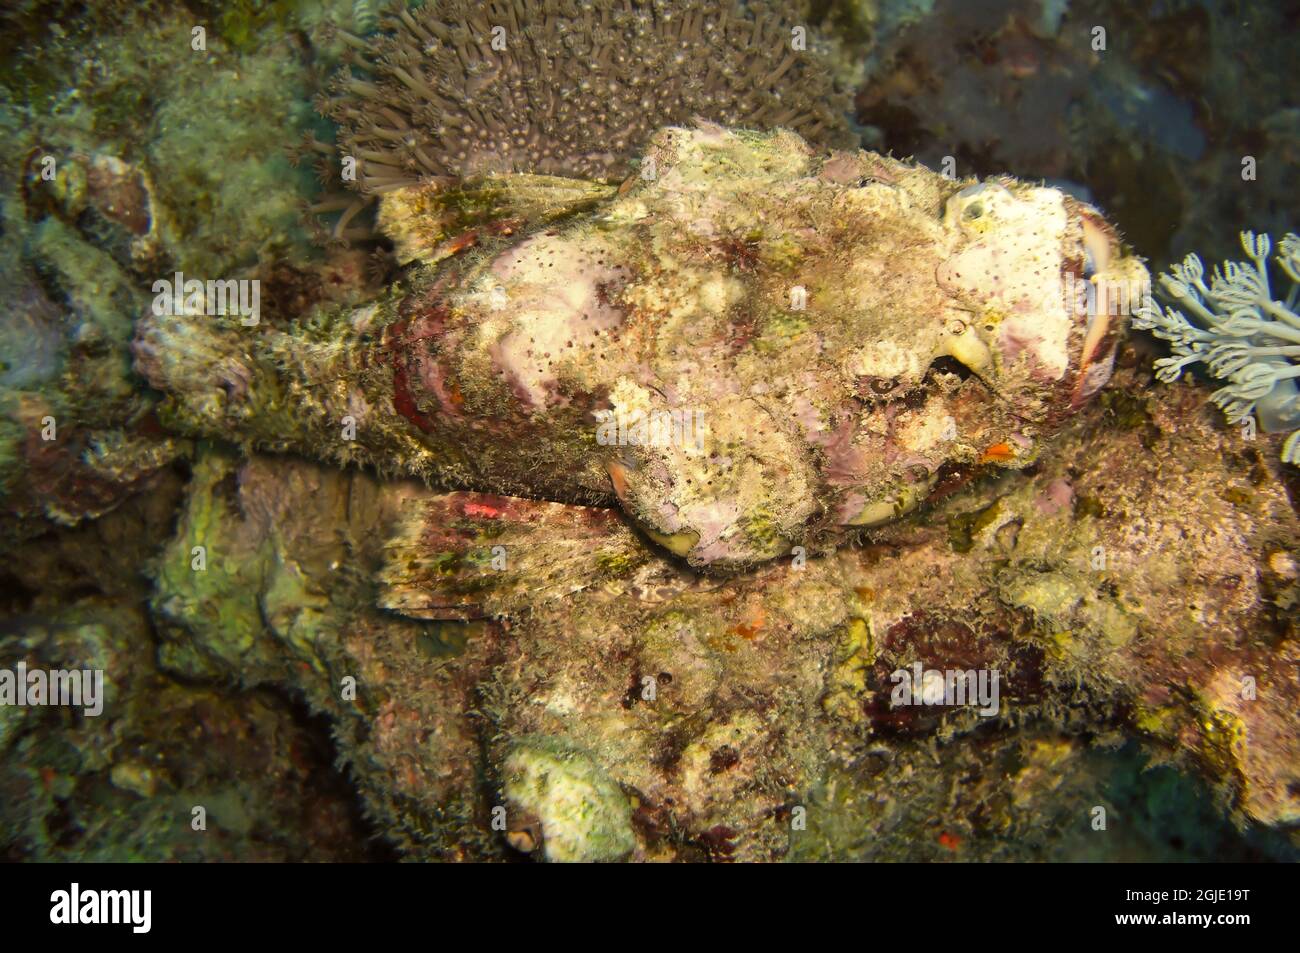 Tasseled Scorpionfish (Scorpaenopsis Oxycephala) swims in the filipino sea January 1, 2012 Stock Photo